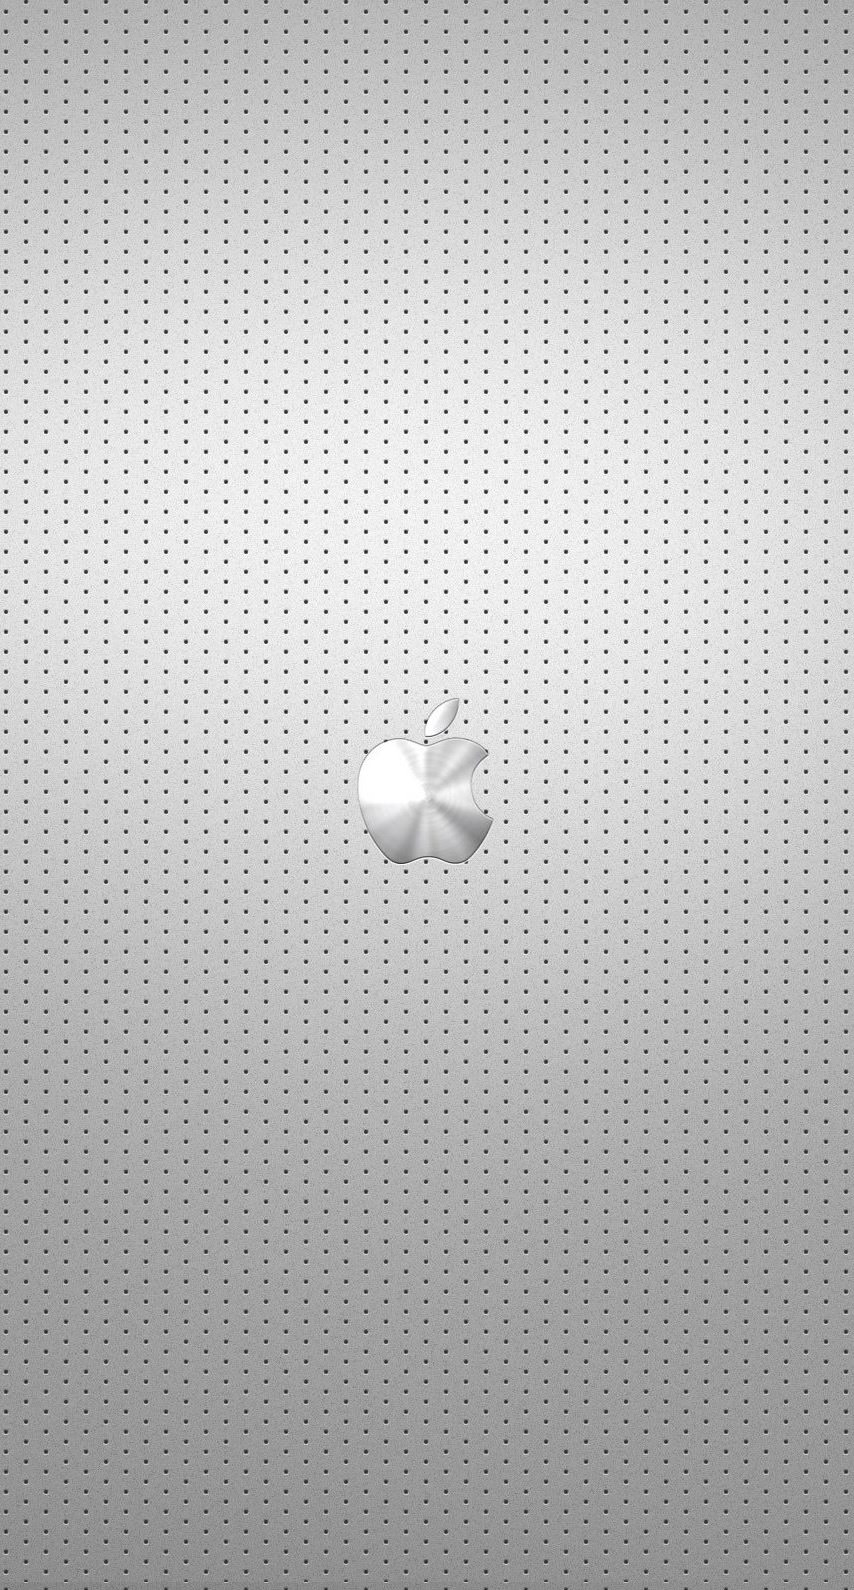 Cool Silver Apple Logo Wallpaper Sc Iphone8